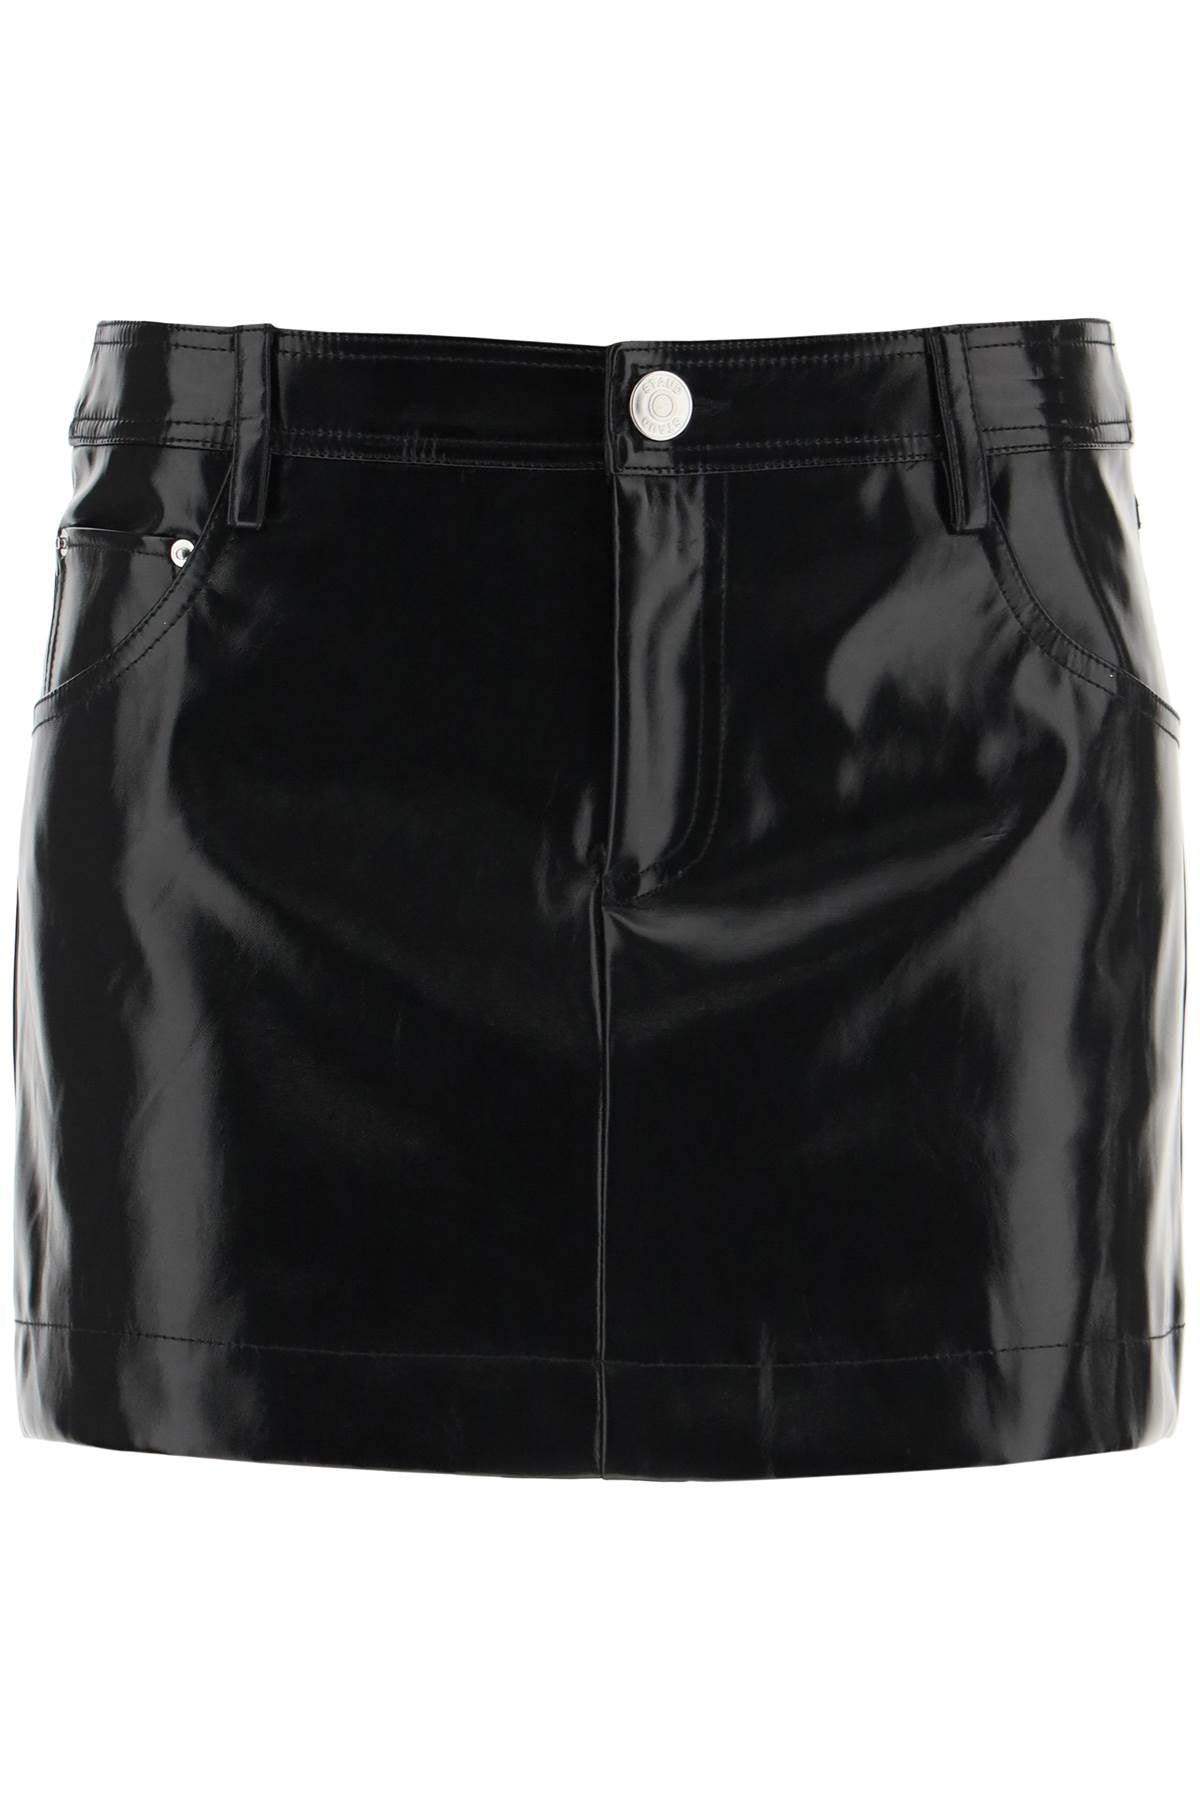 Staud vegan leather 'drawing' miniskirt 412 4135 BLACK